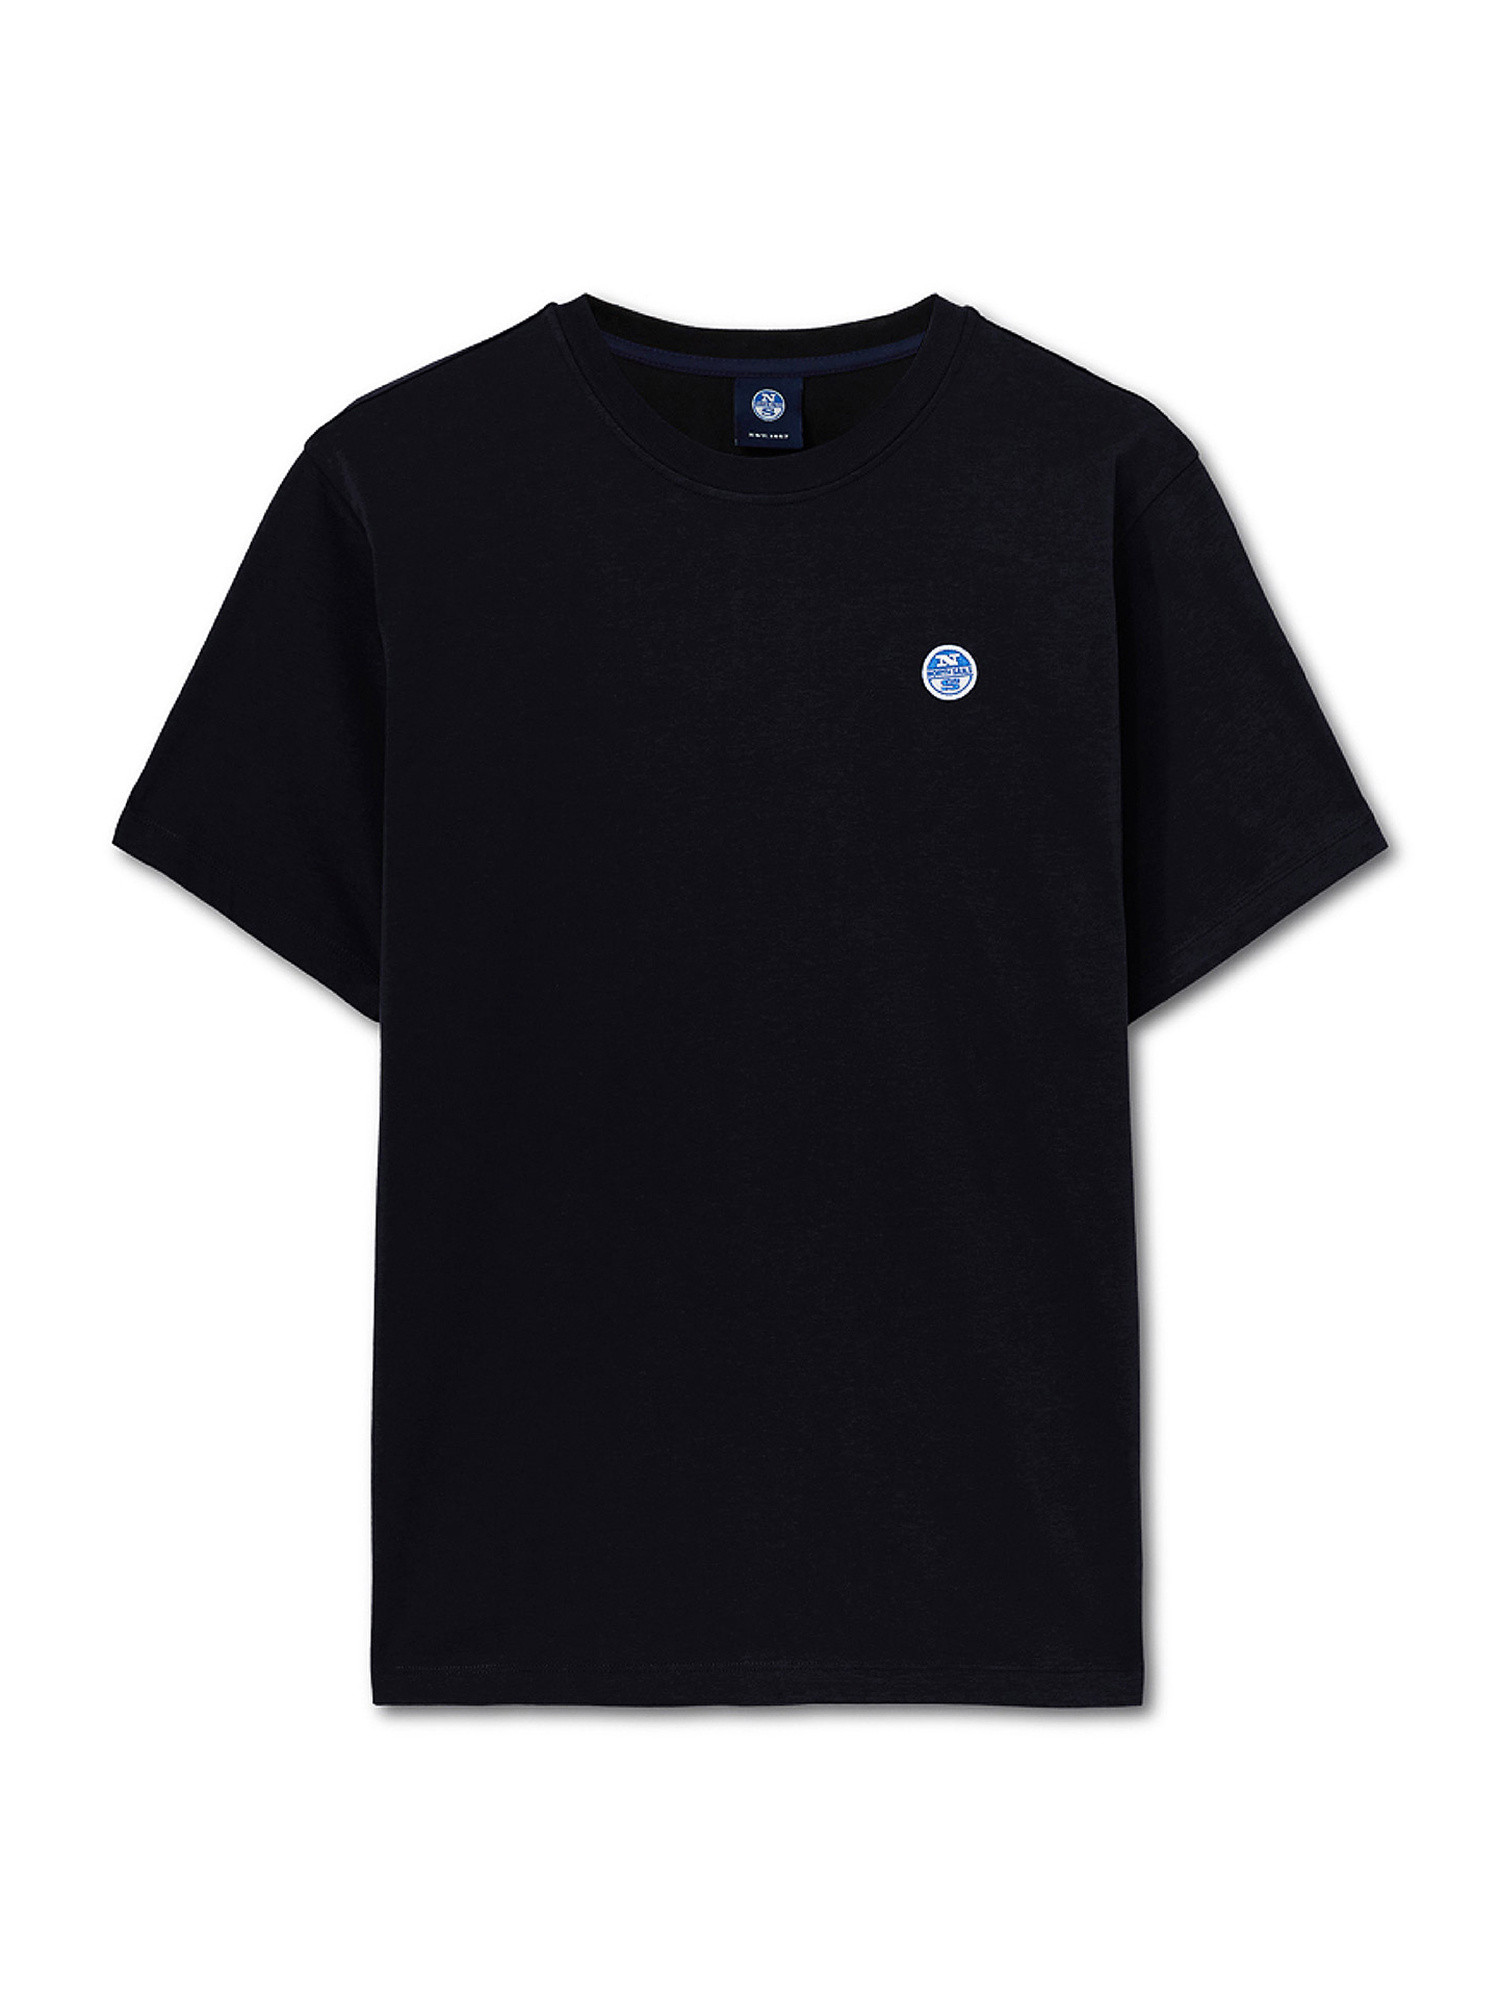 T-shirt manica corta con logo, Nero, large image number 0